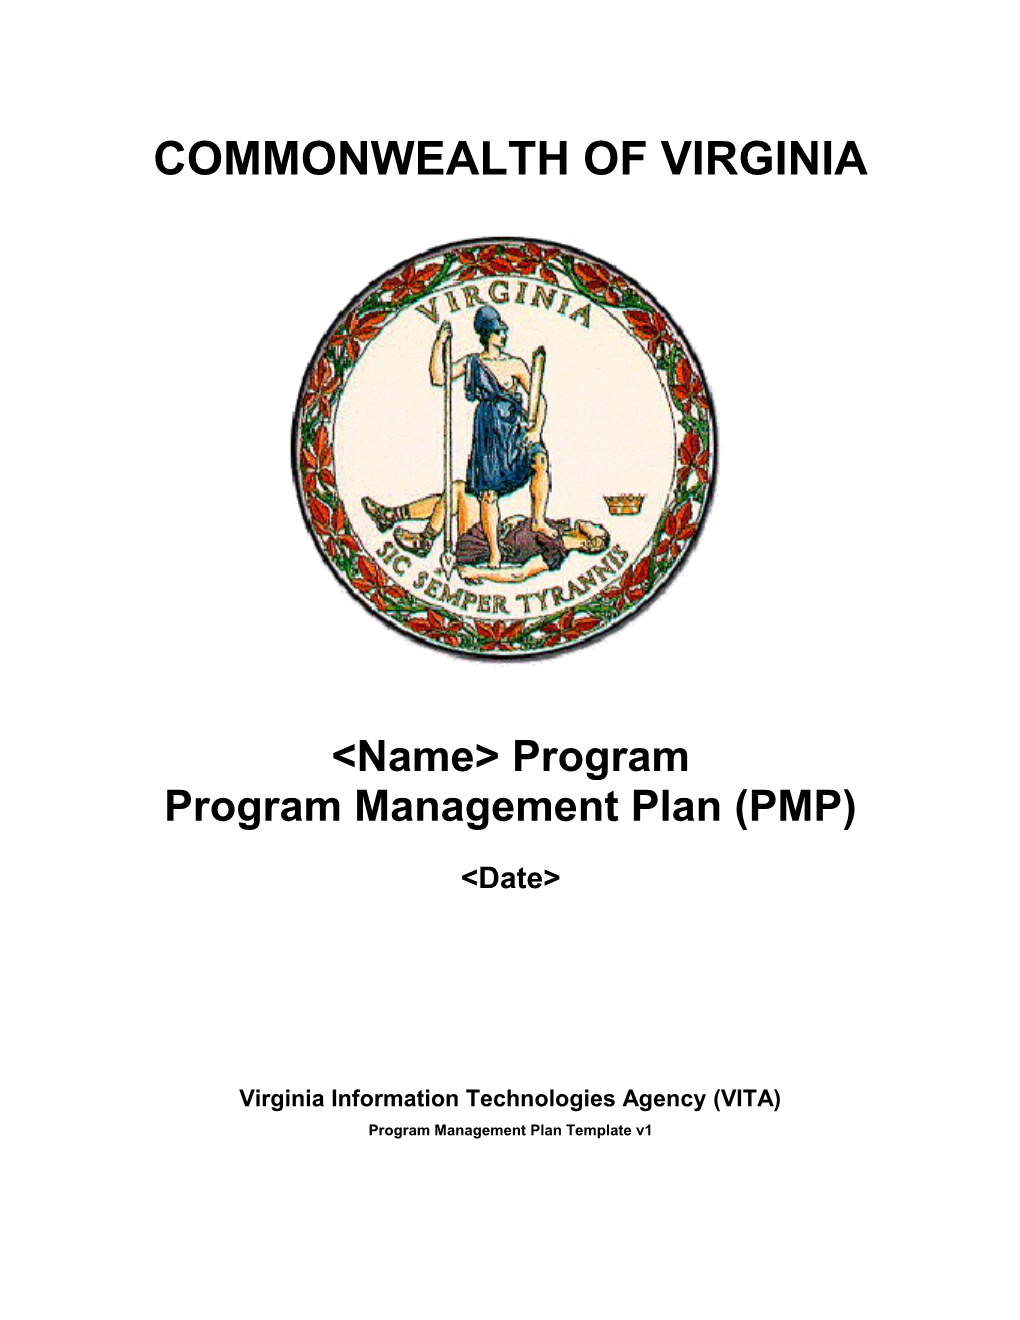 Virginia Information Technologies Agency (VITA)